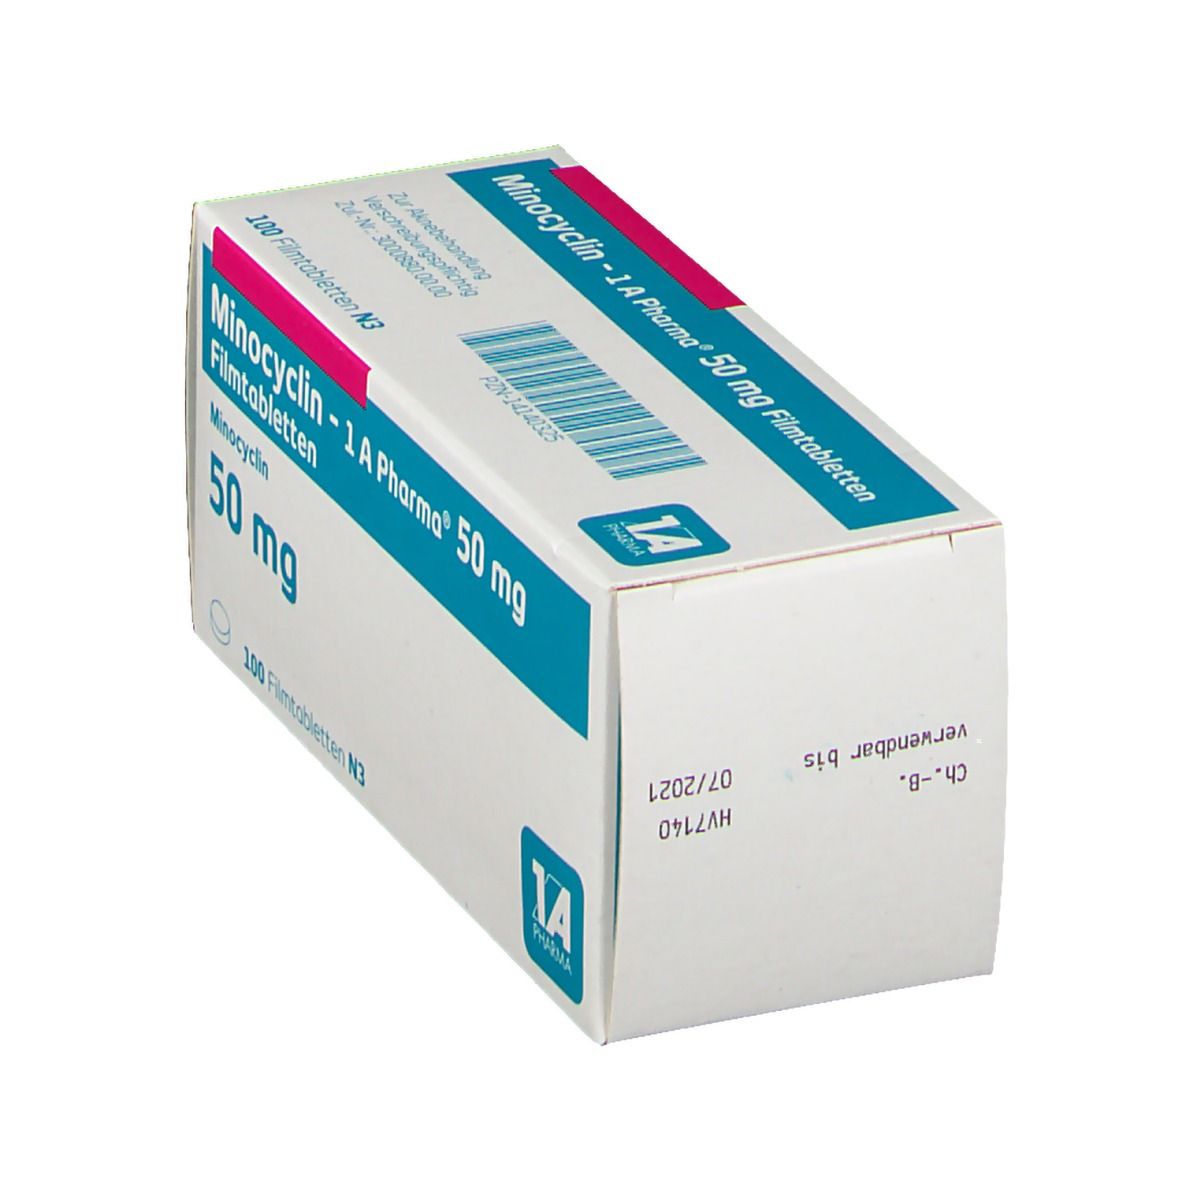 Minocyclin - 1 A Pharma® 50 mg